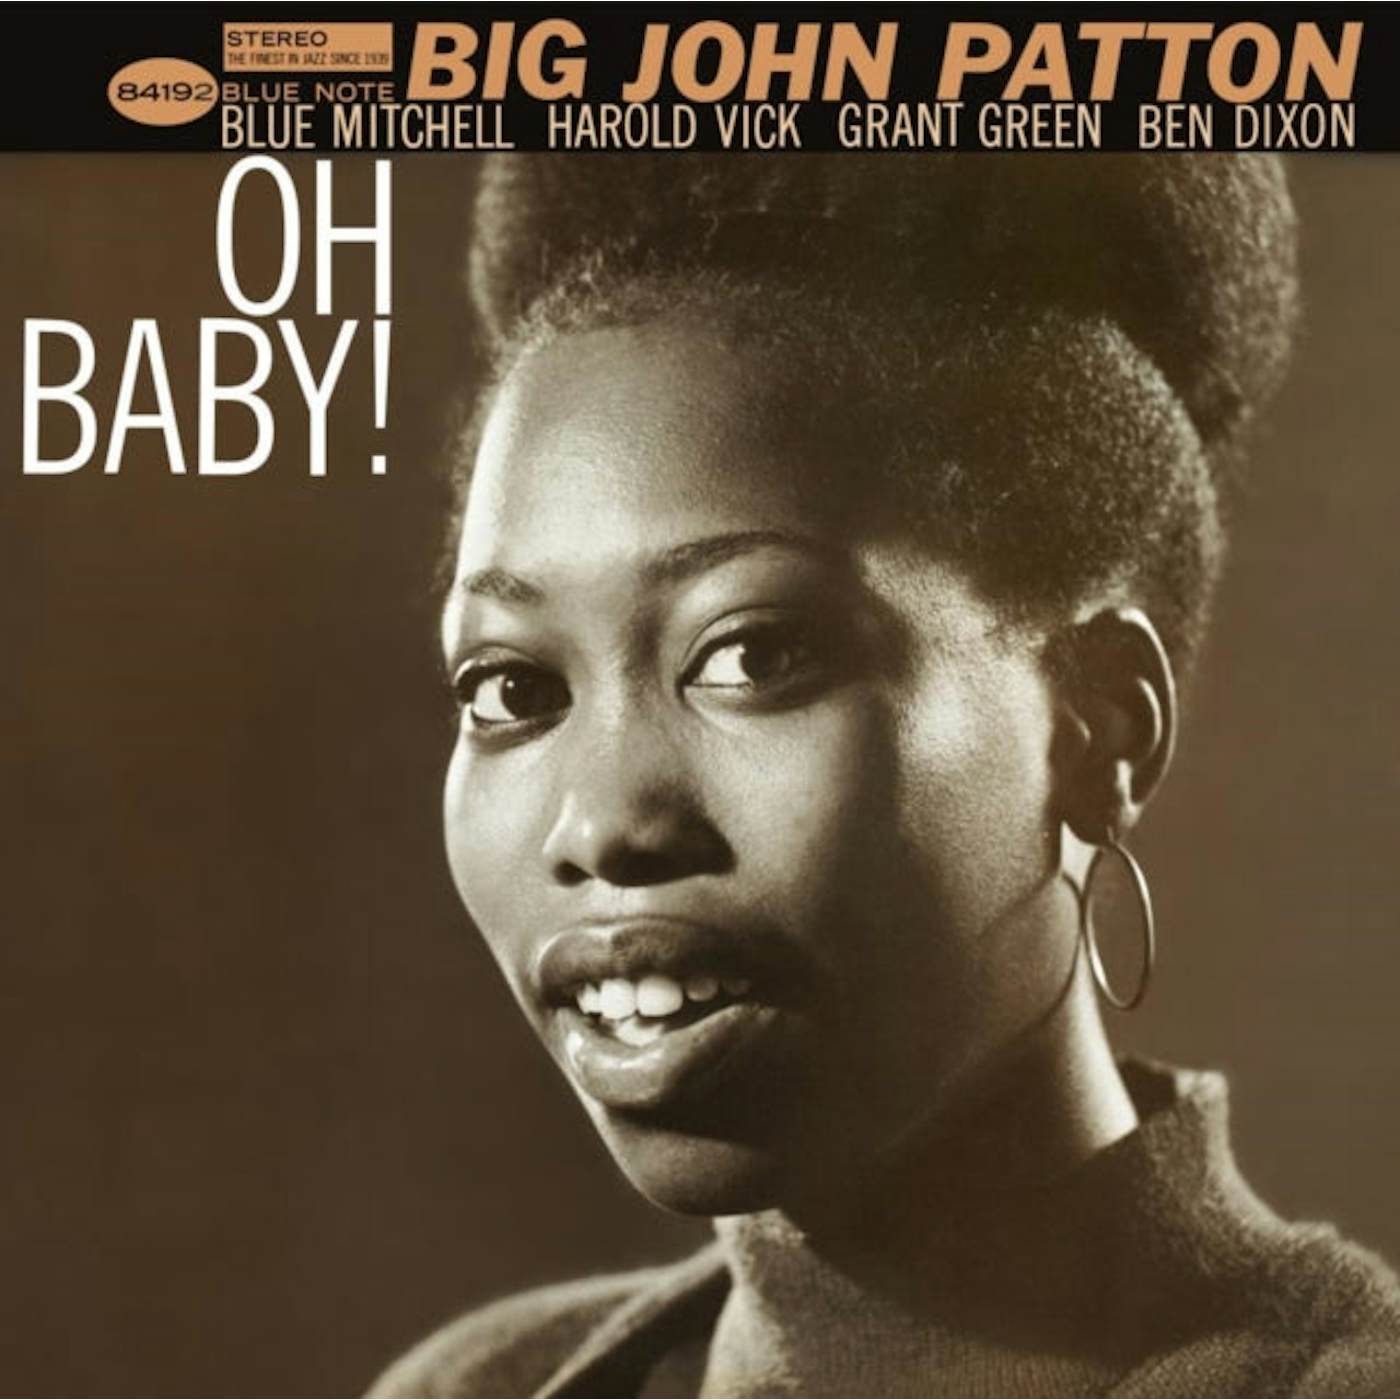 Big John Patton LP - Oh Baby! (Vinyl)